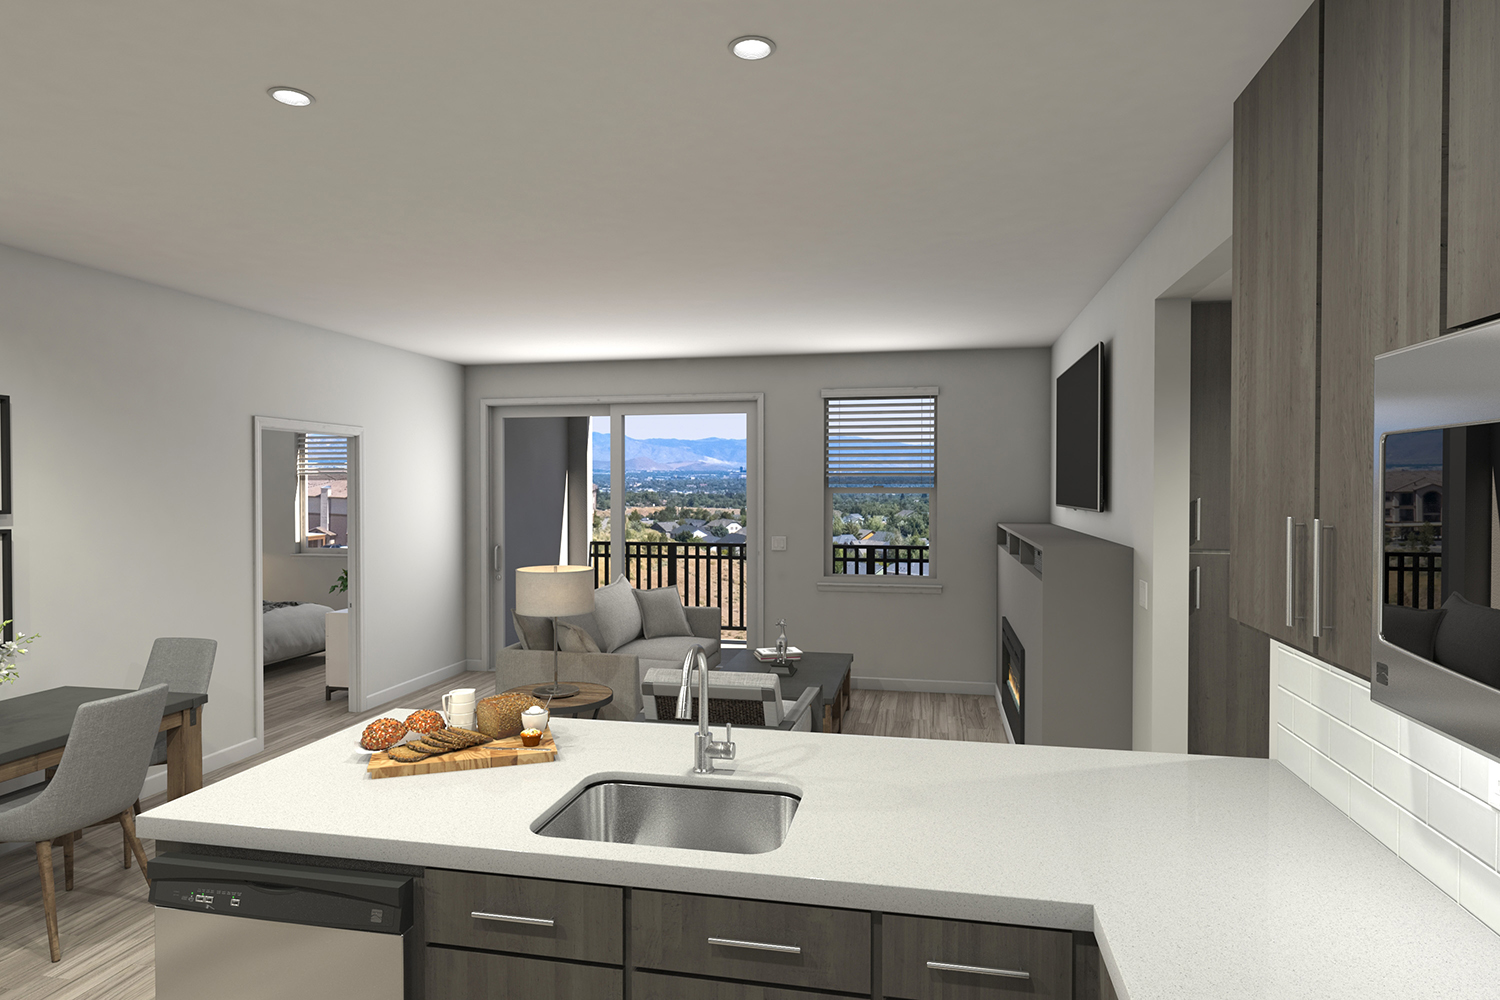 The Overlook at Keystone Canyon Apartments - Reno NV - Three Bedroom - Living Room & Patio